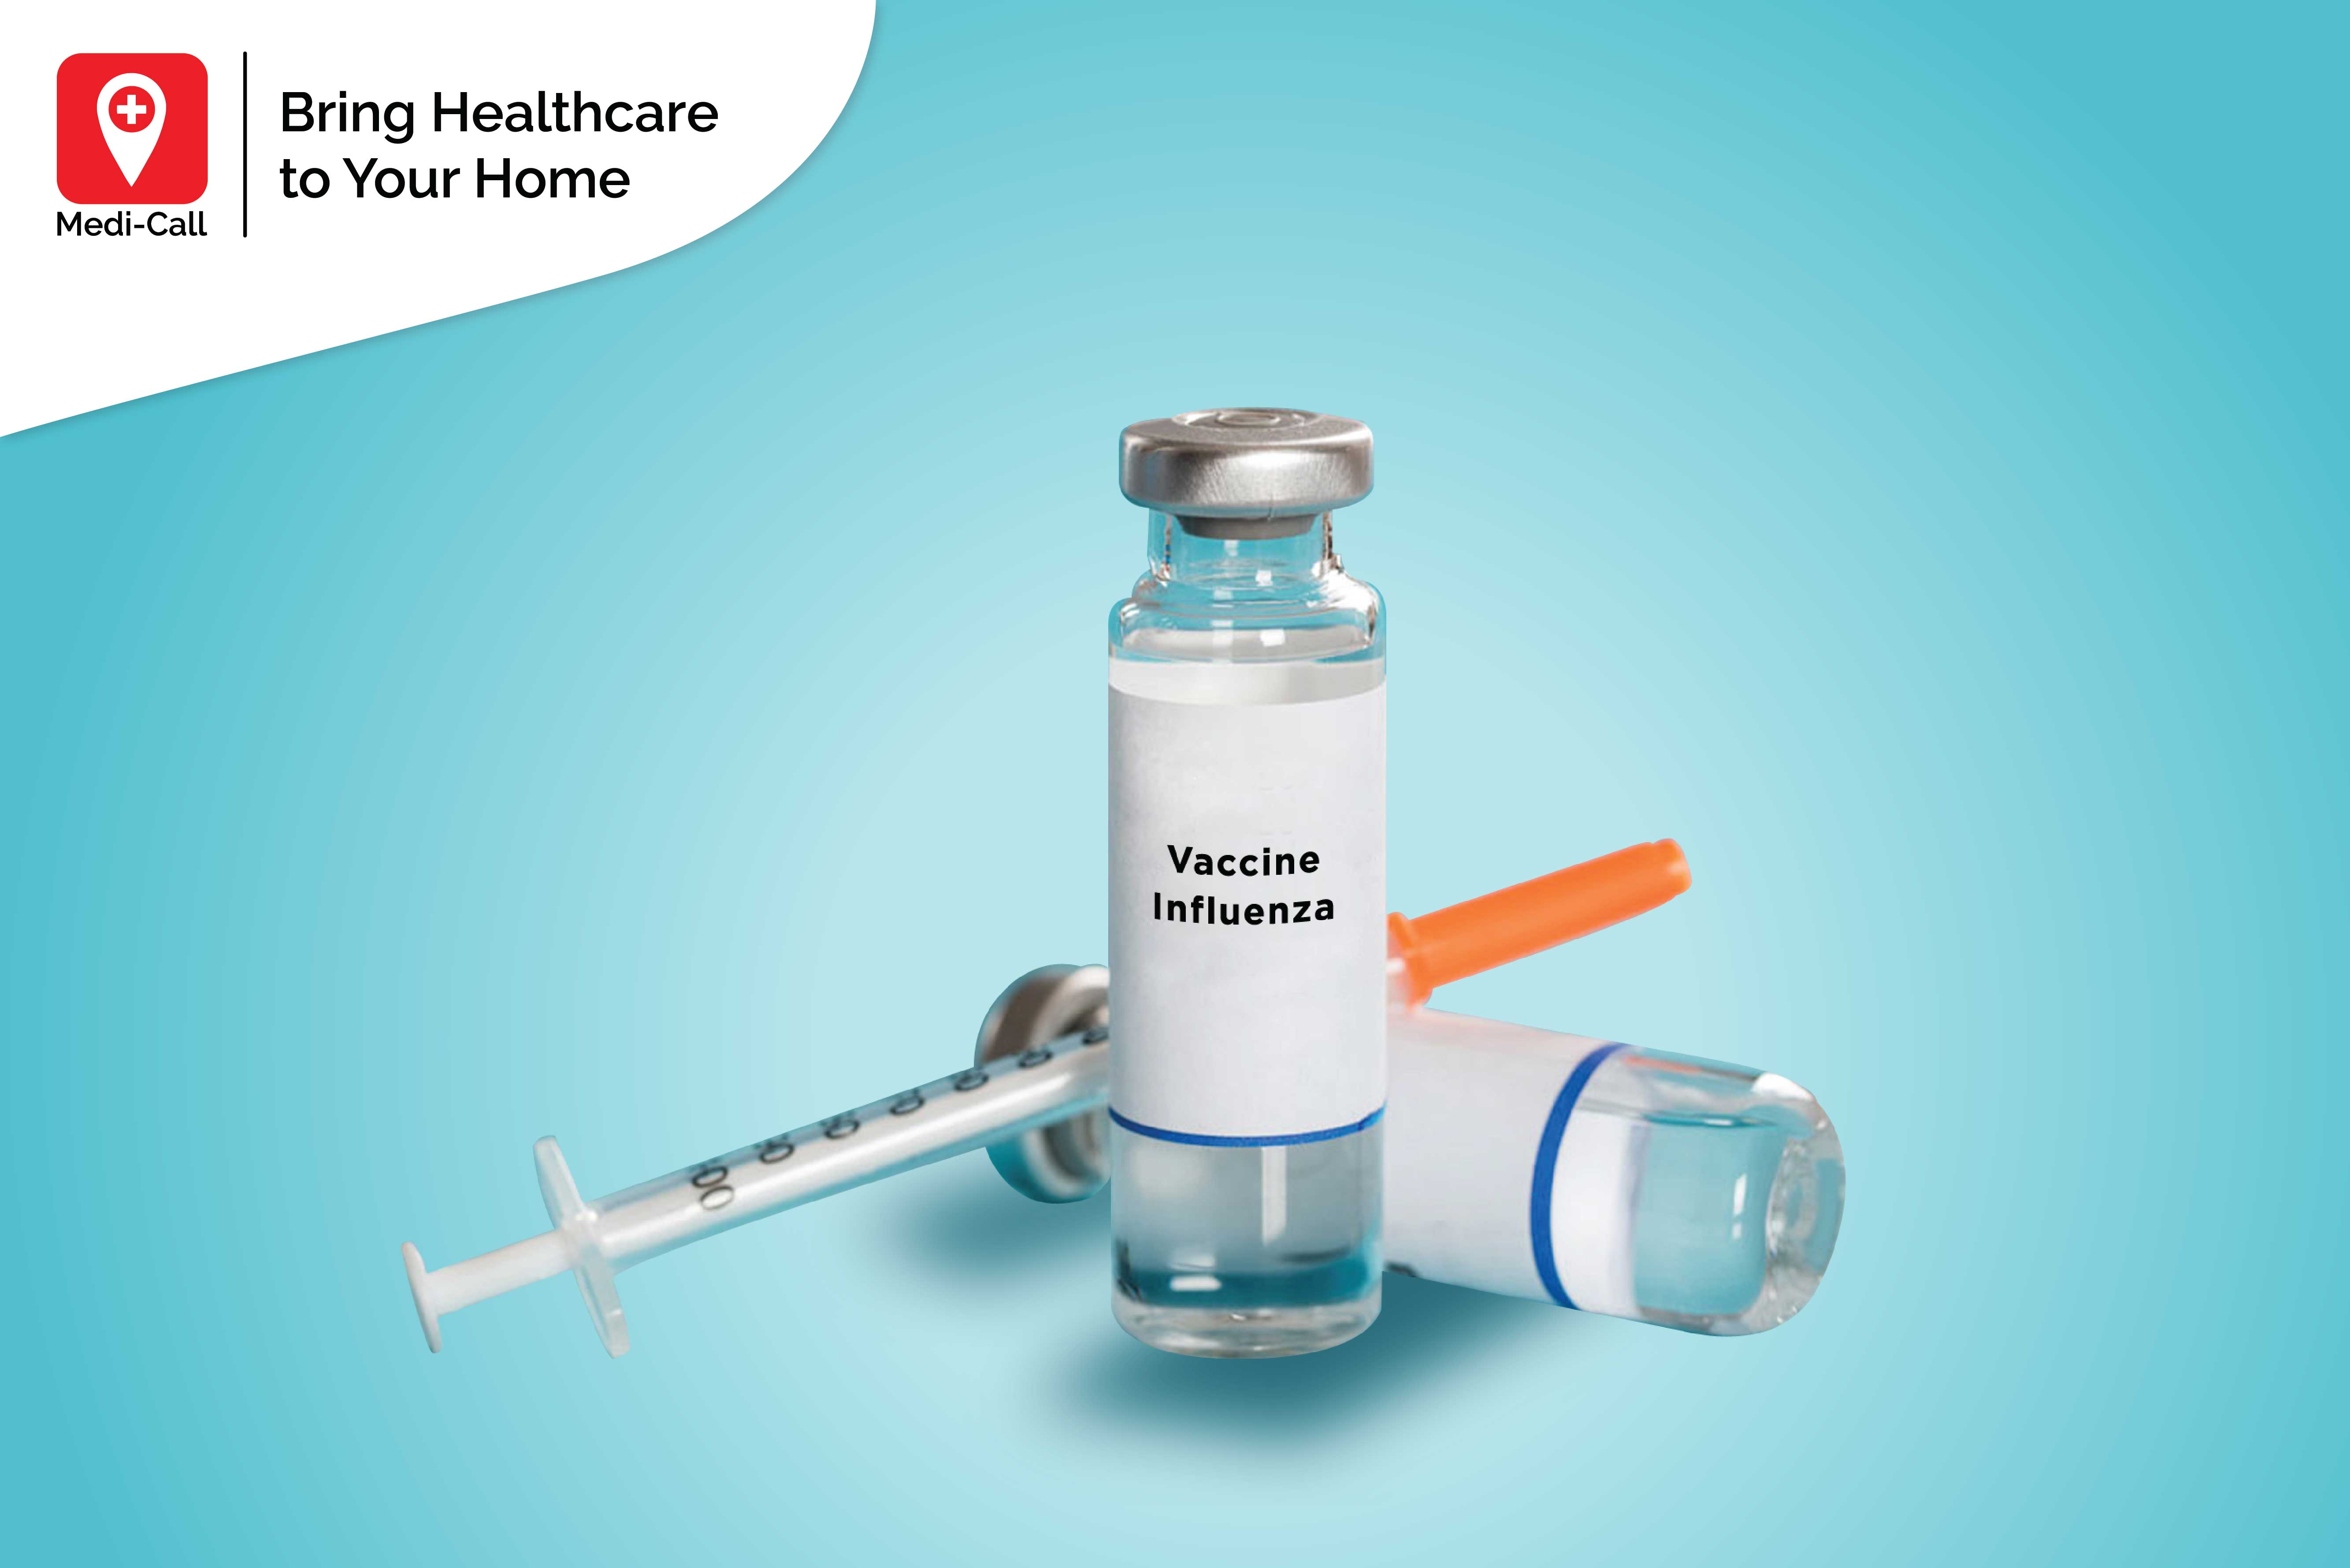 vaksin influenza untuk lansia, vaksin influenza, vaksin untuk lansia, vaksin di rumah Anda, medi-call, medicall